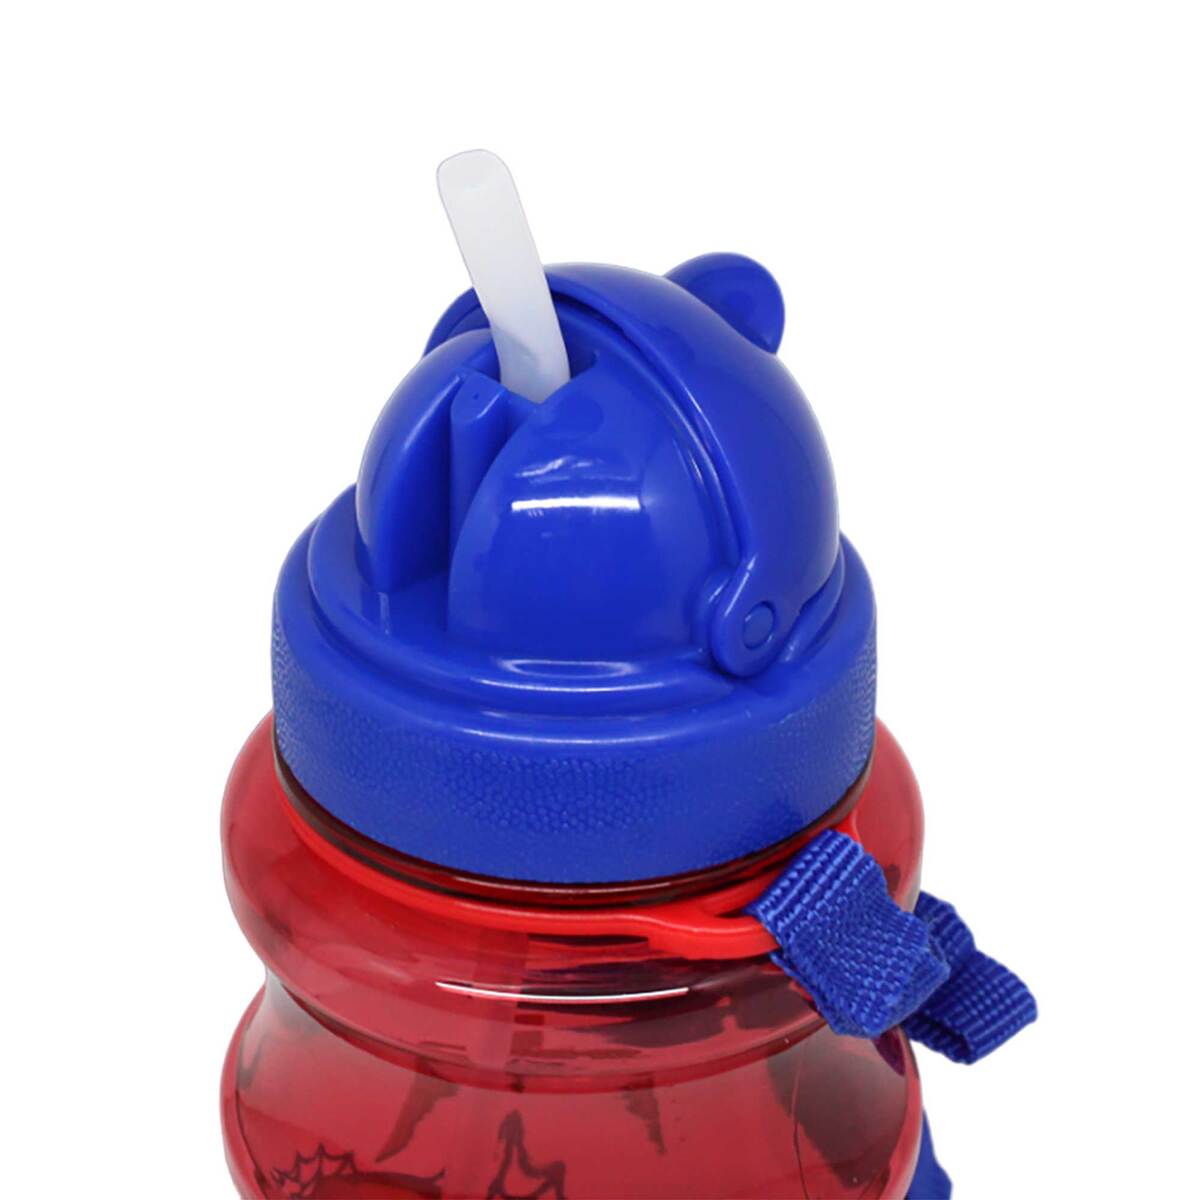 Spiderman Transparent Water Bottle | School Supplies | Halabh.com